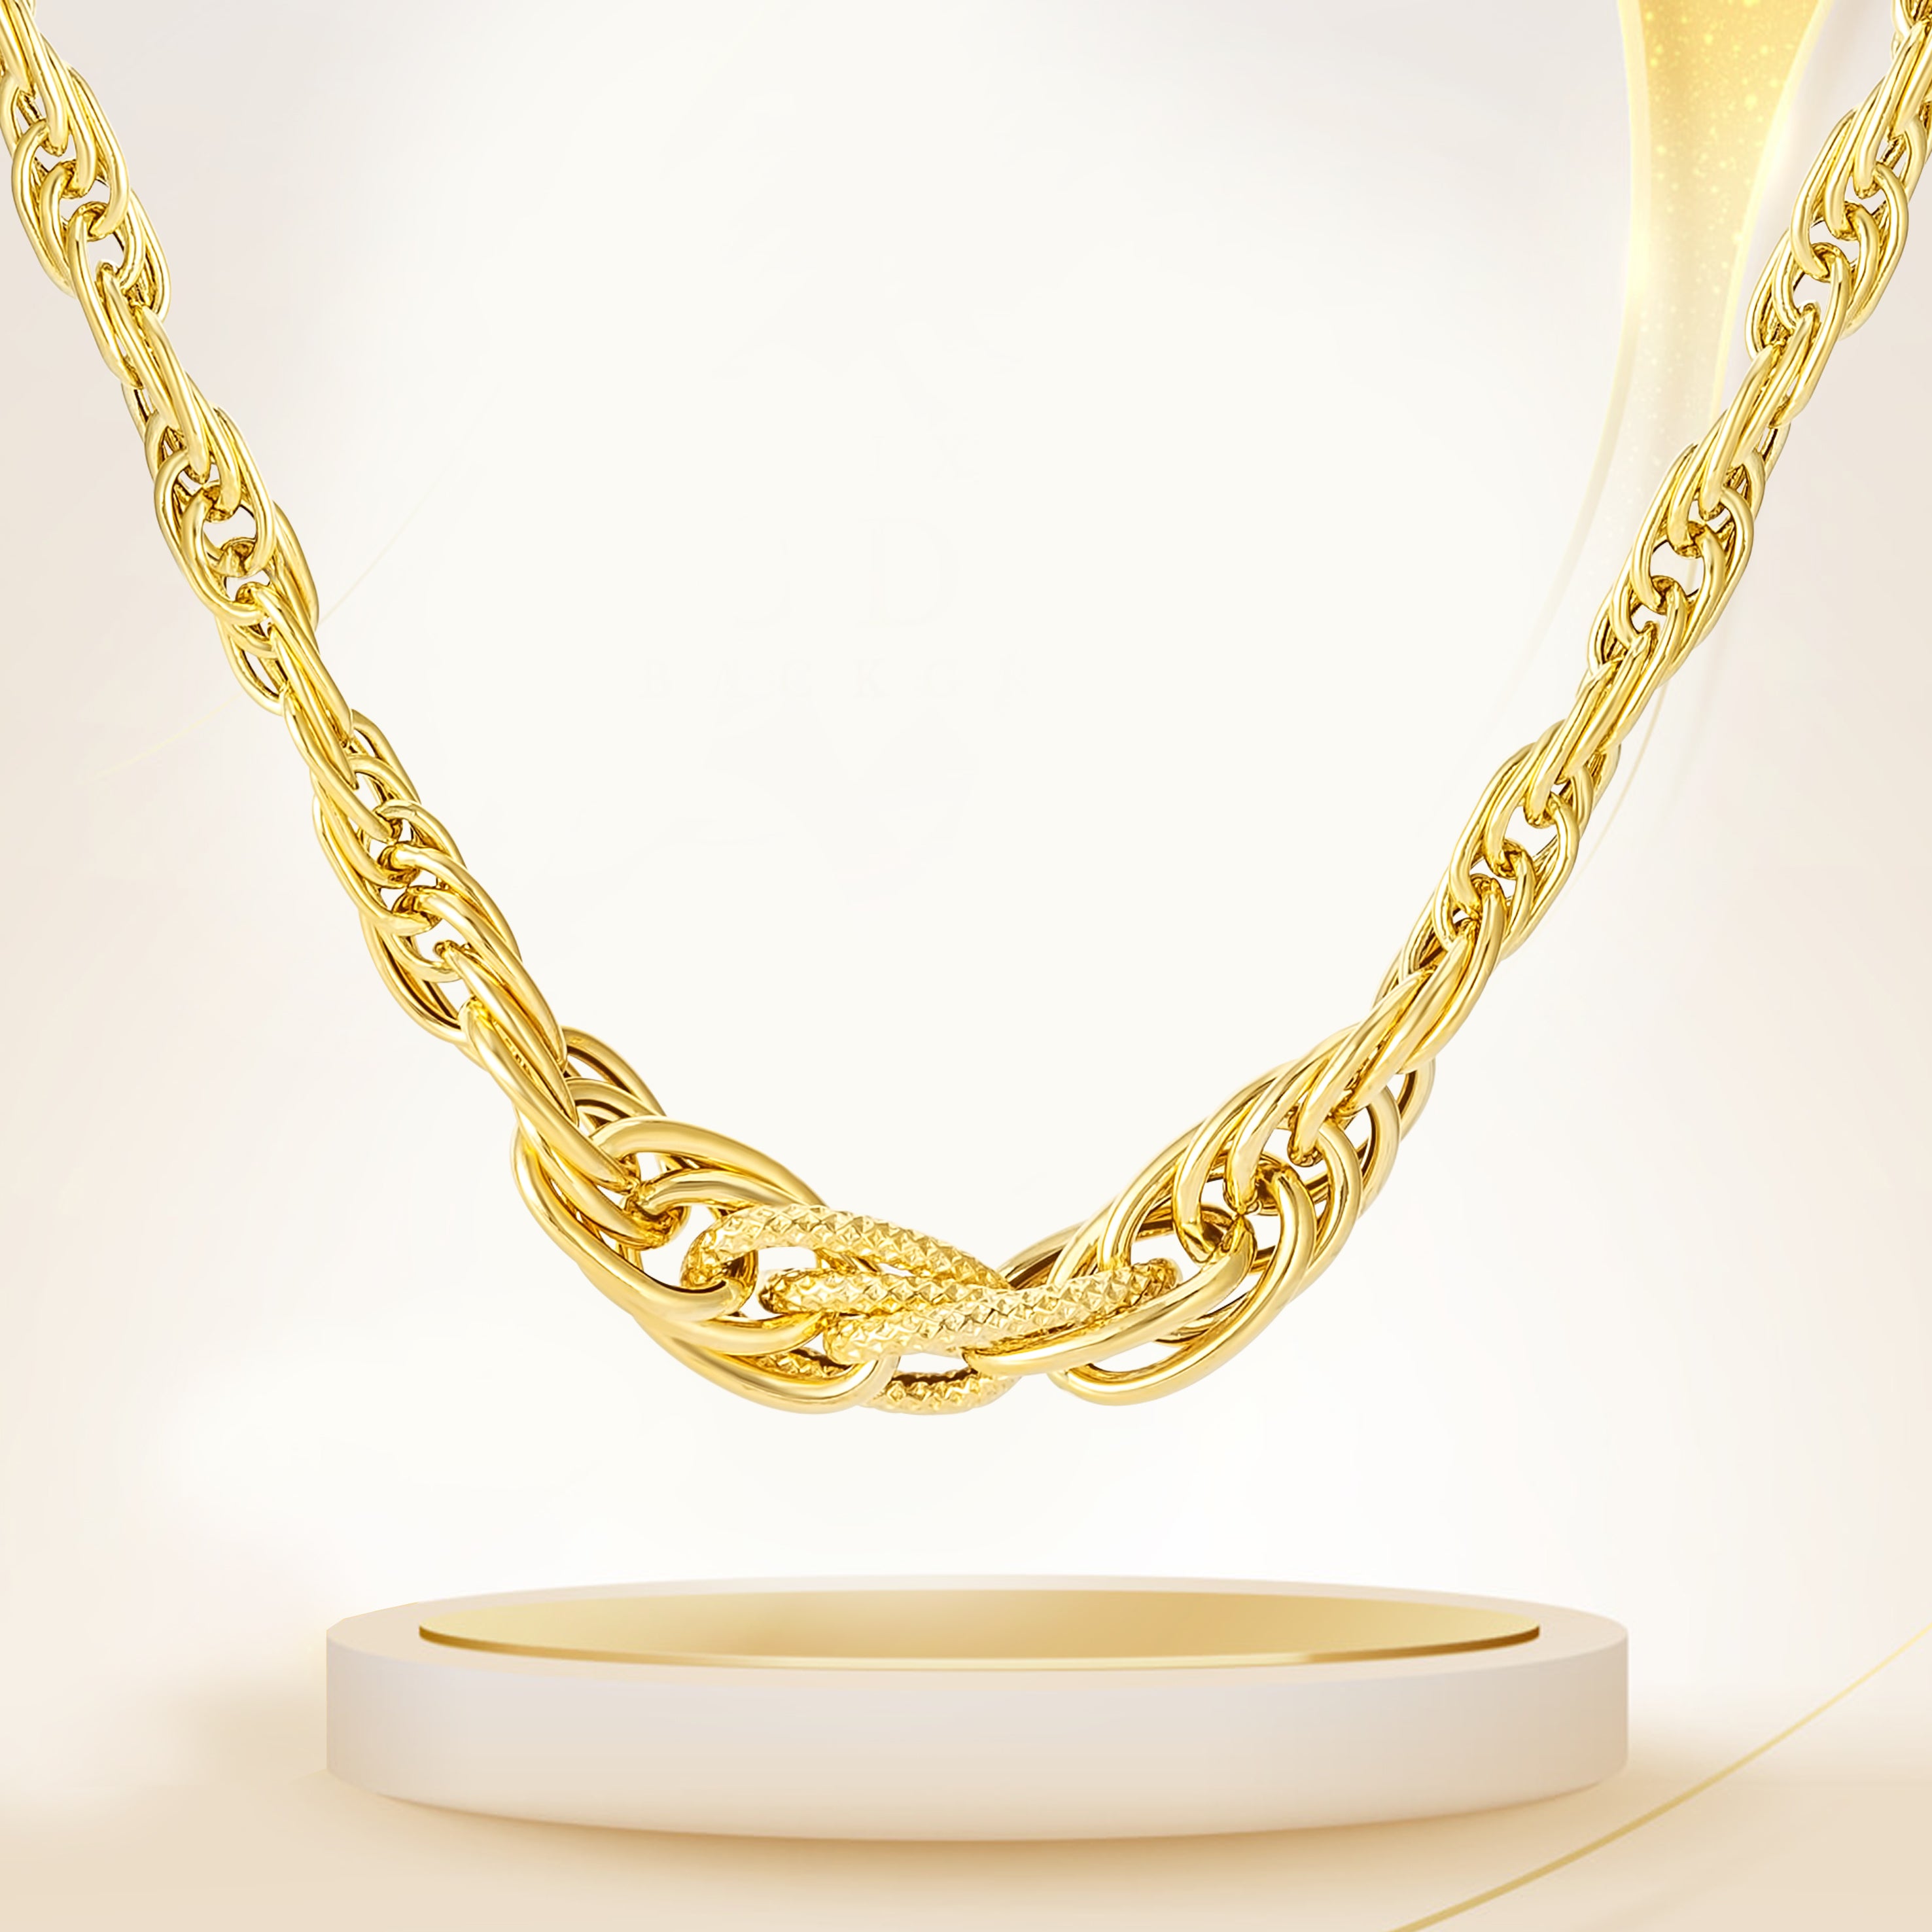 18K Pure Gold Elegant Linked Chain